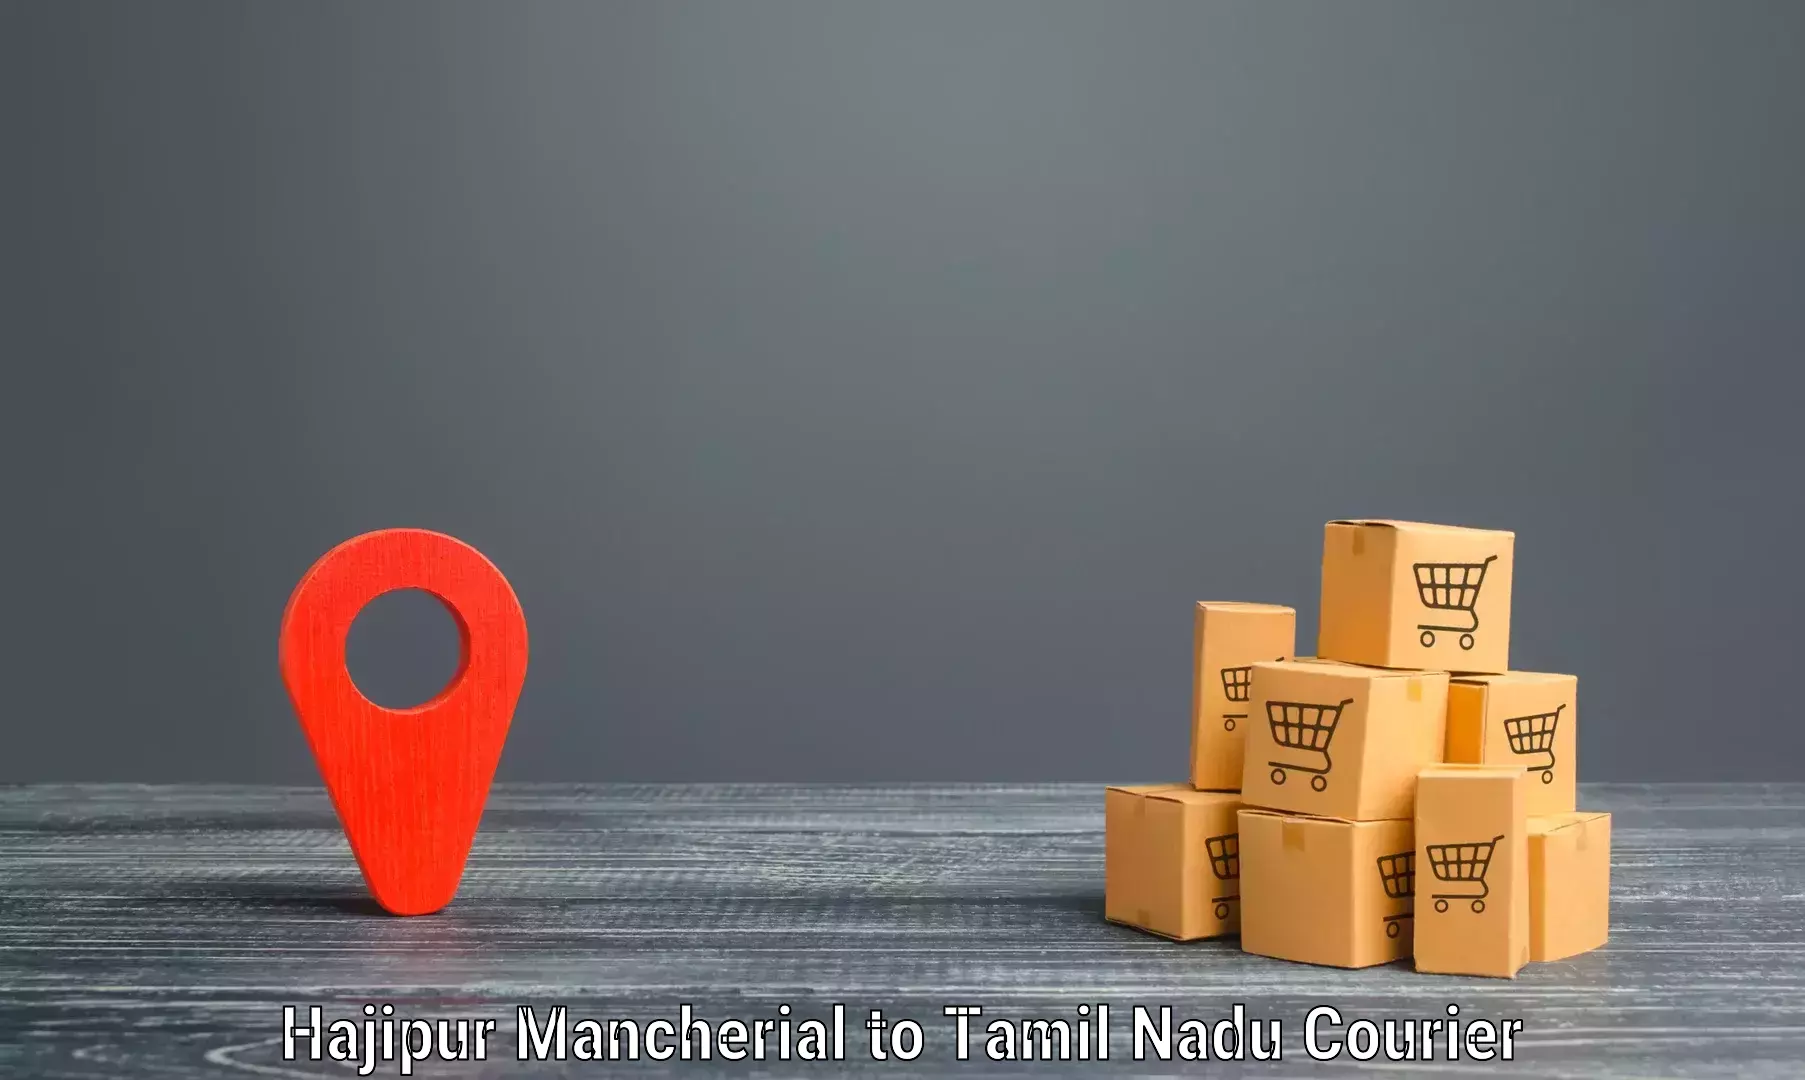 Advanced courier platforms Hajipur Mancherial to Thiruvadanai